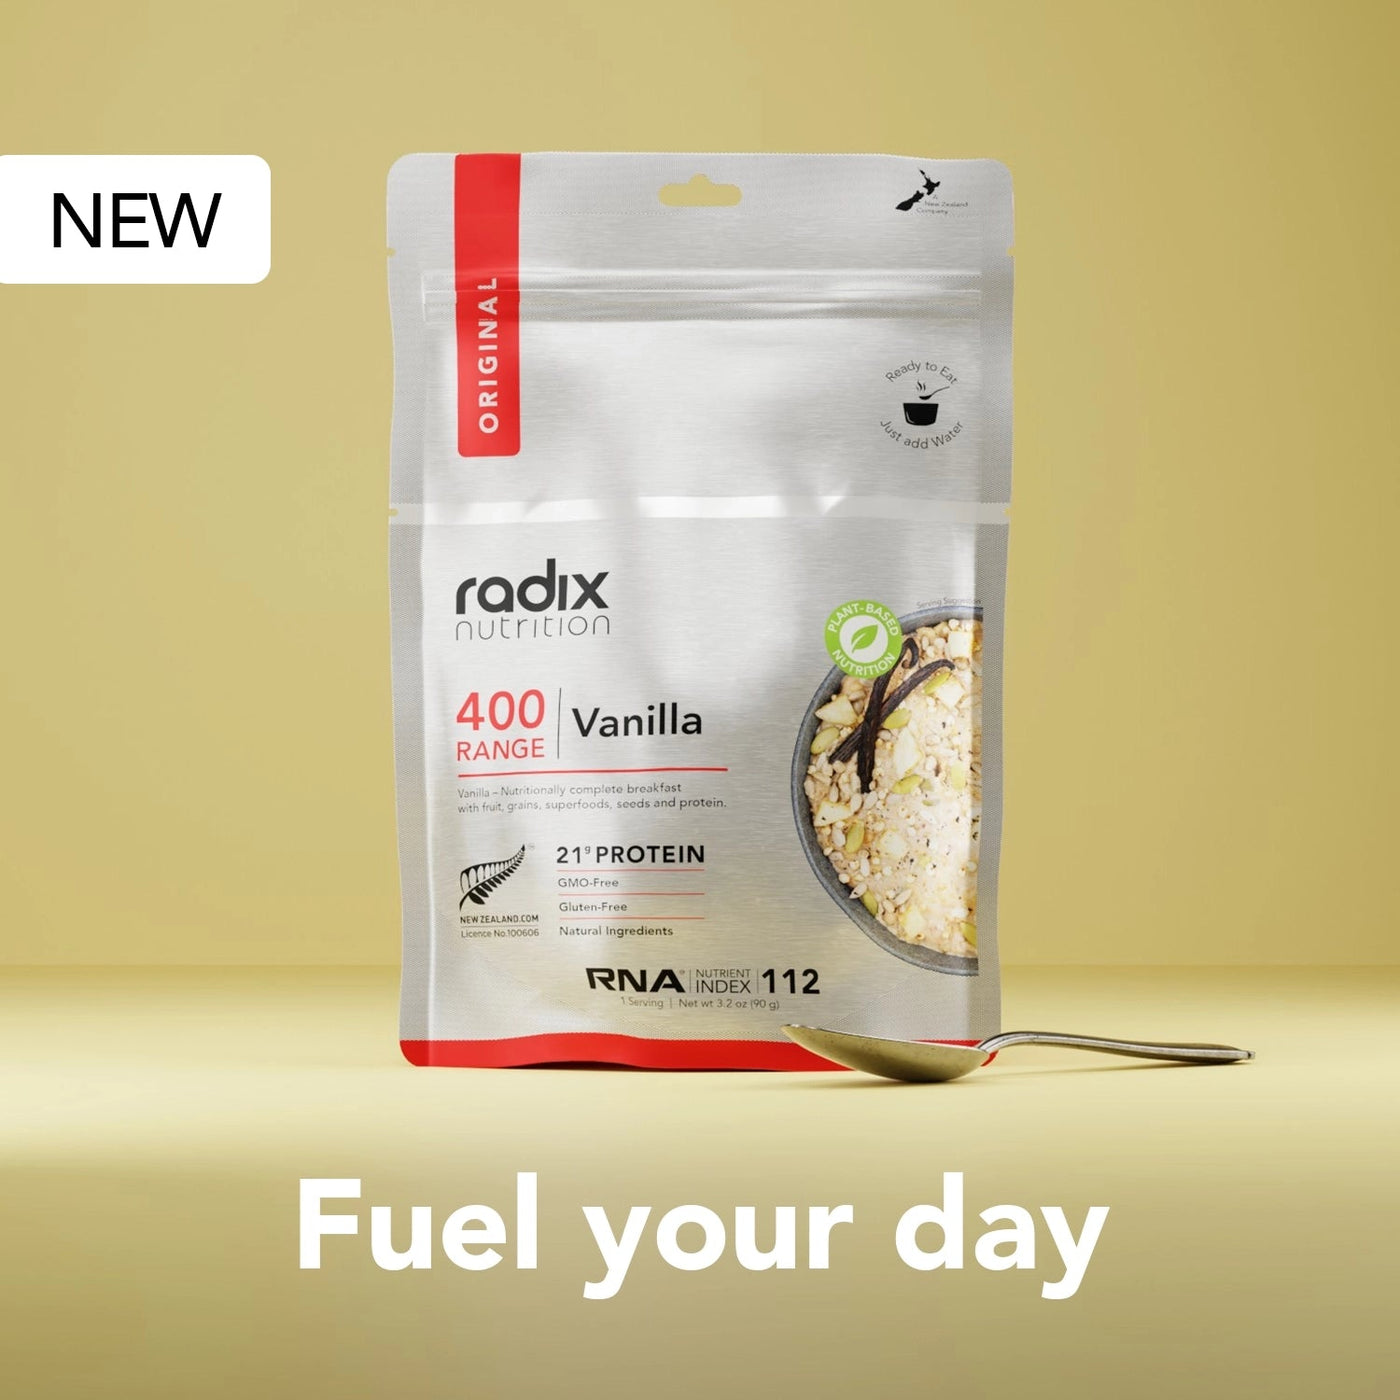 Radix Original 400 Vanilla Breakfast